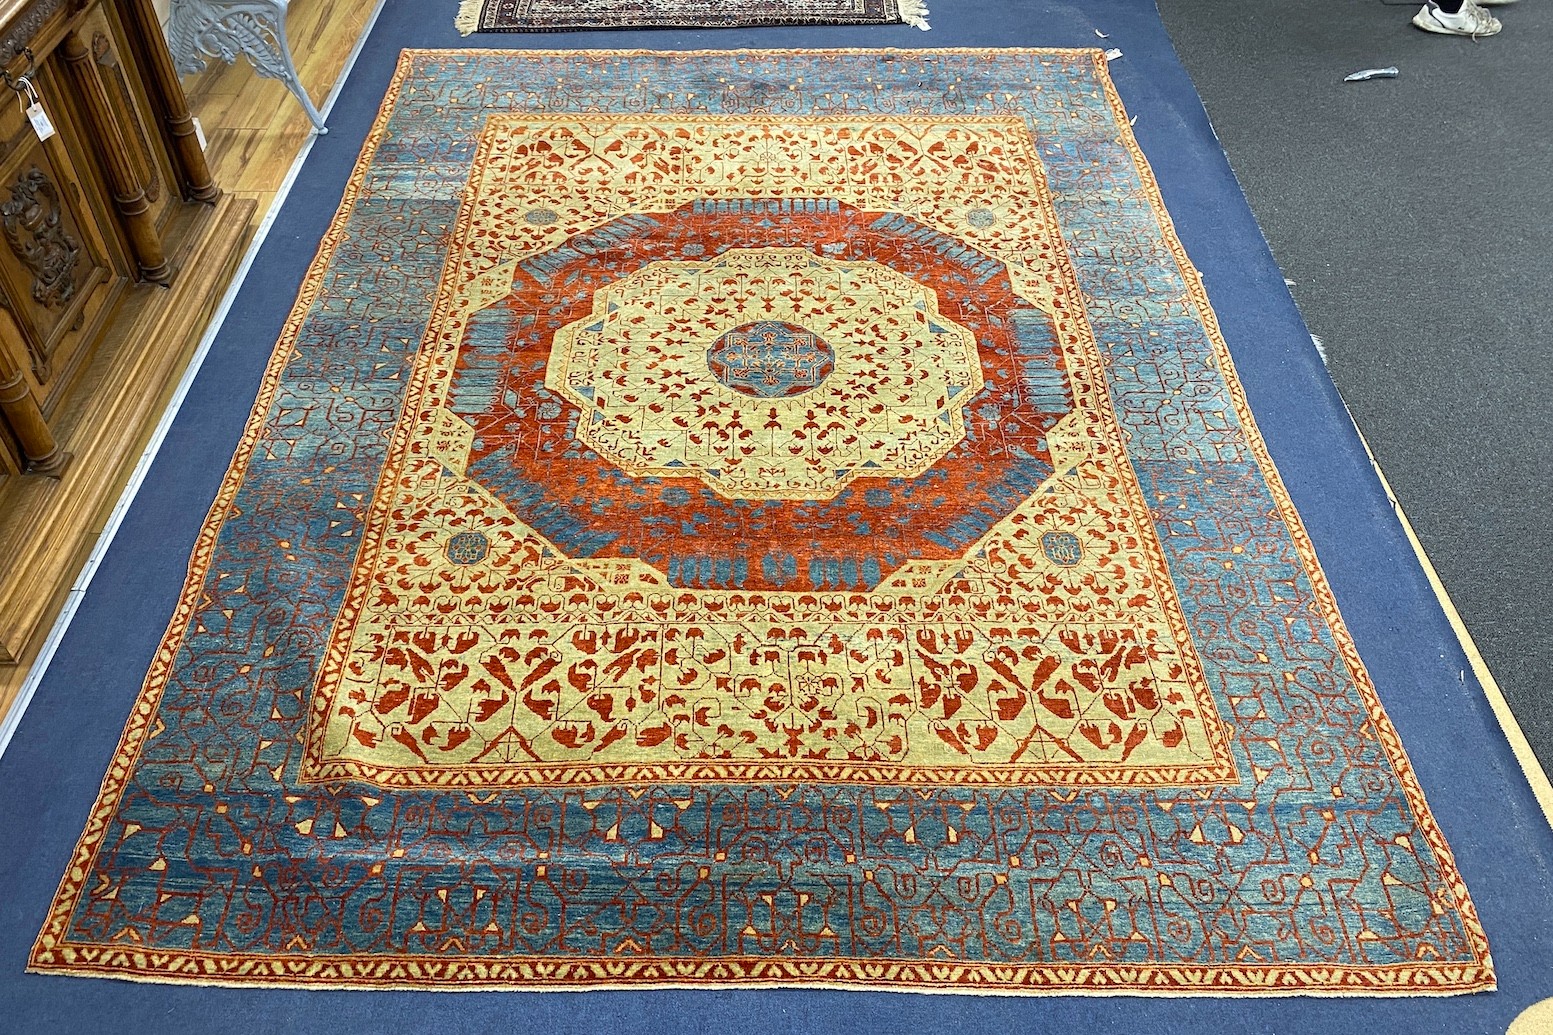 A modern Turkish Mamluk style carpet